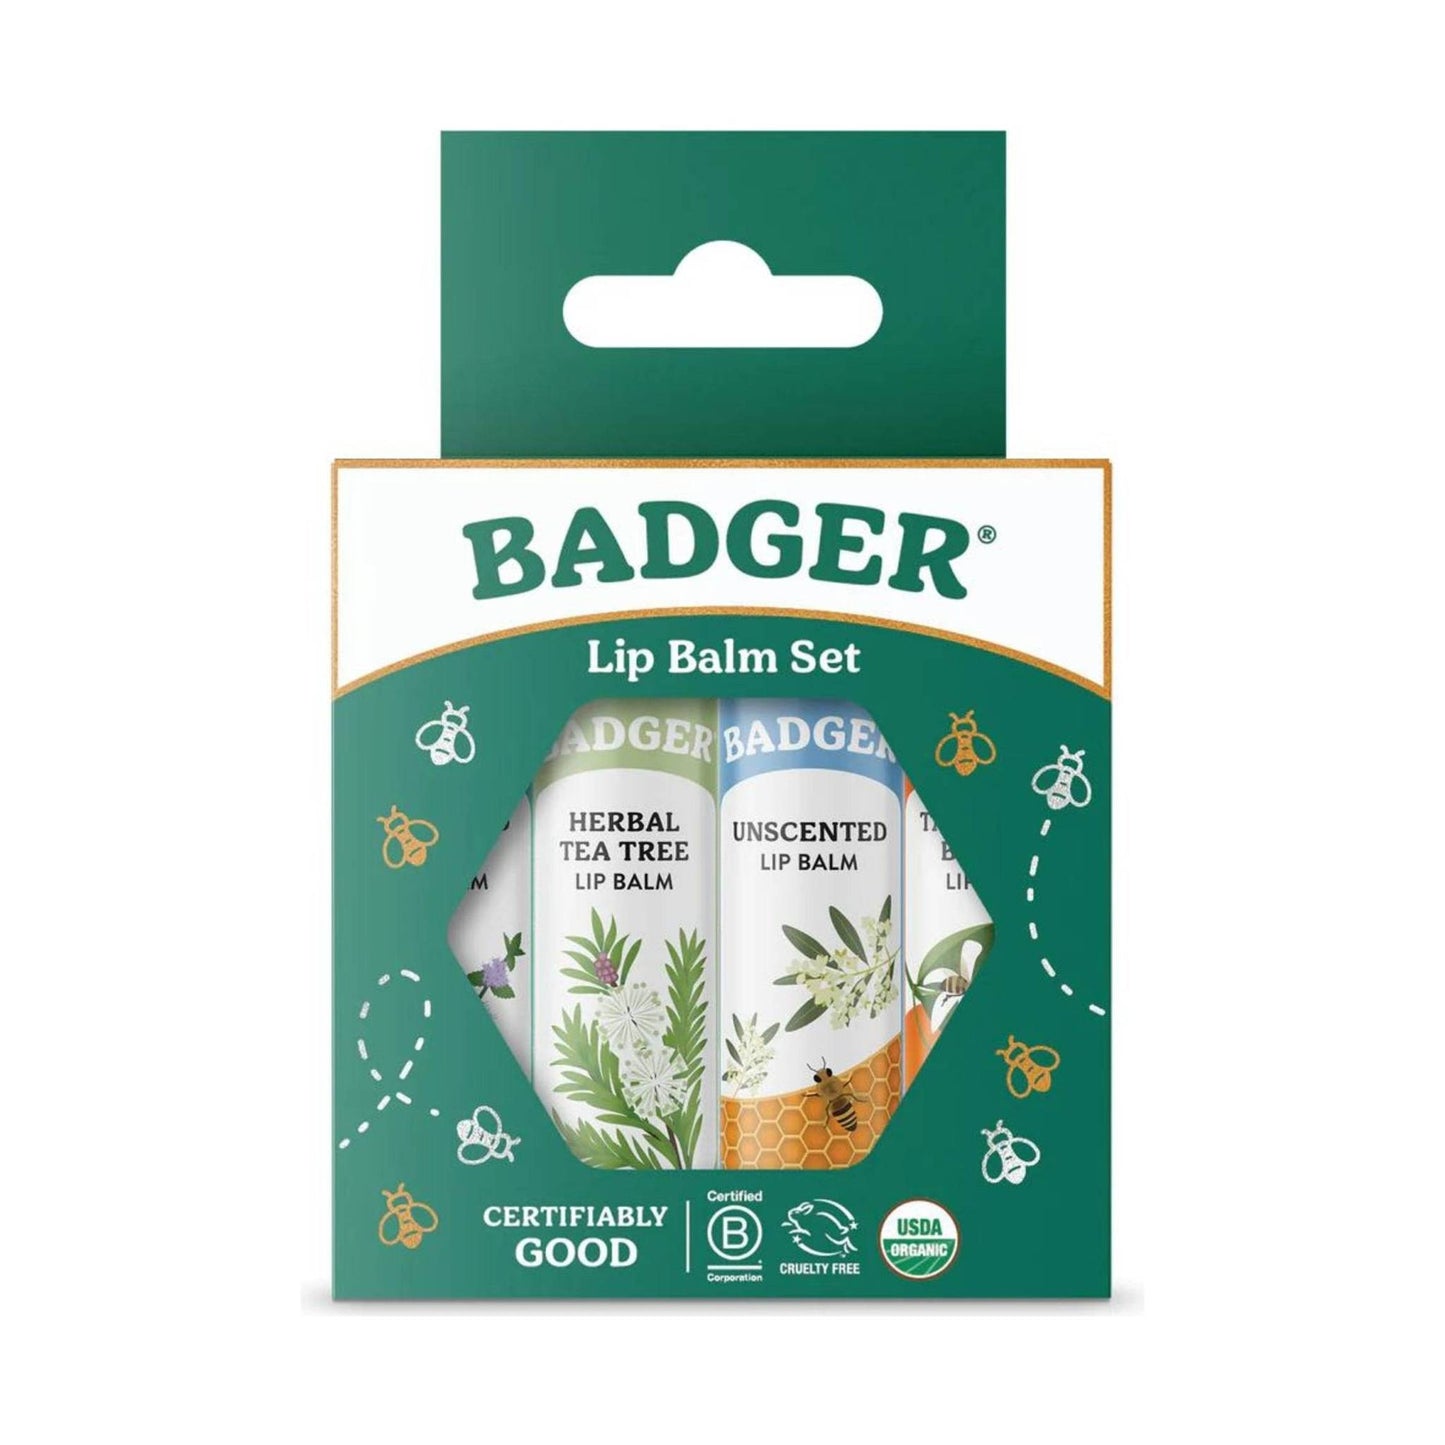 Badger Classic Lip Balm 4-Pack - Green Box